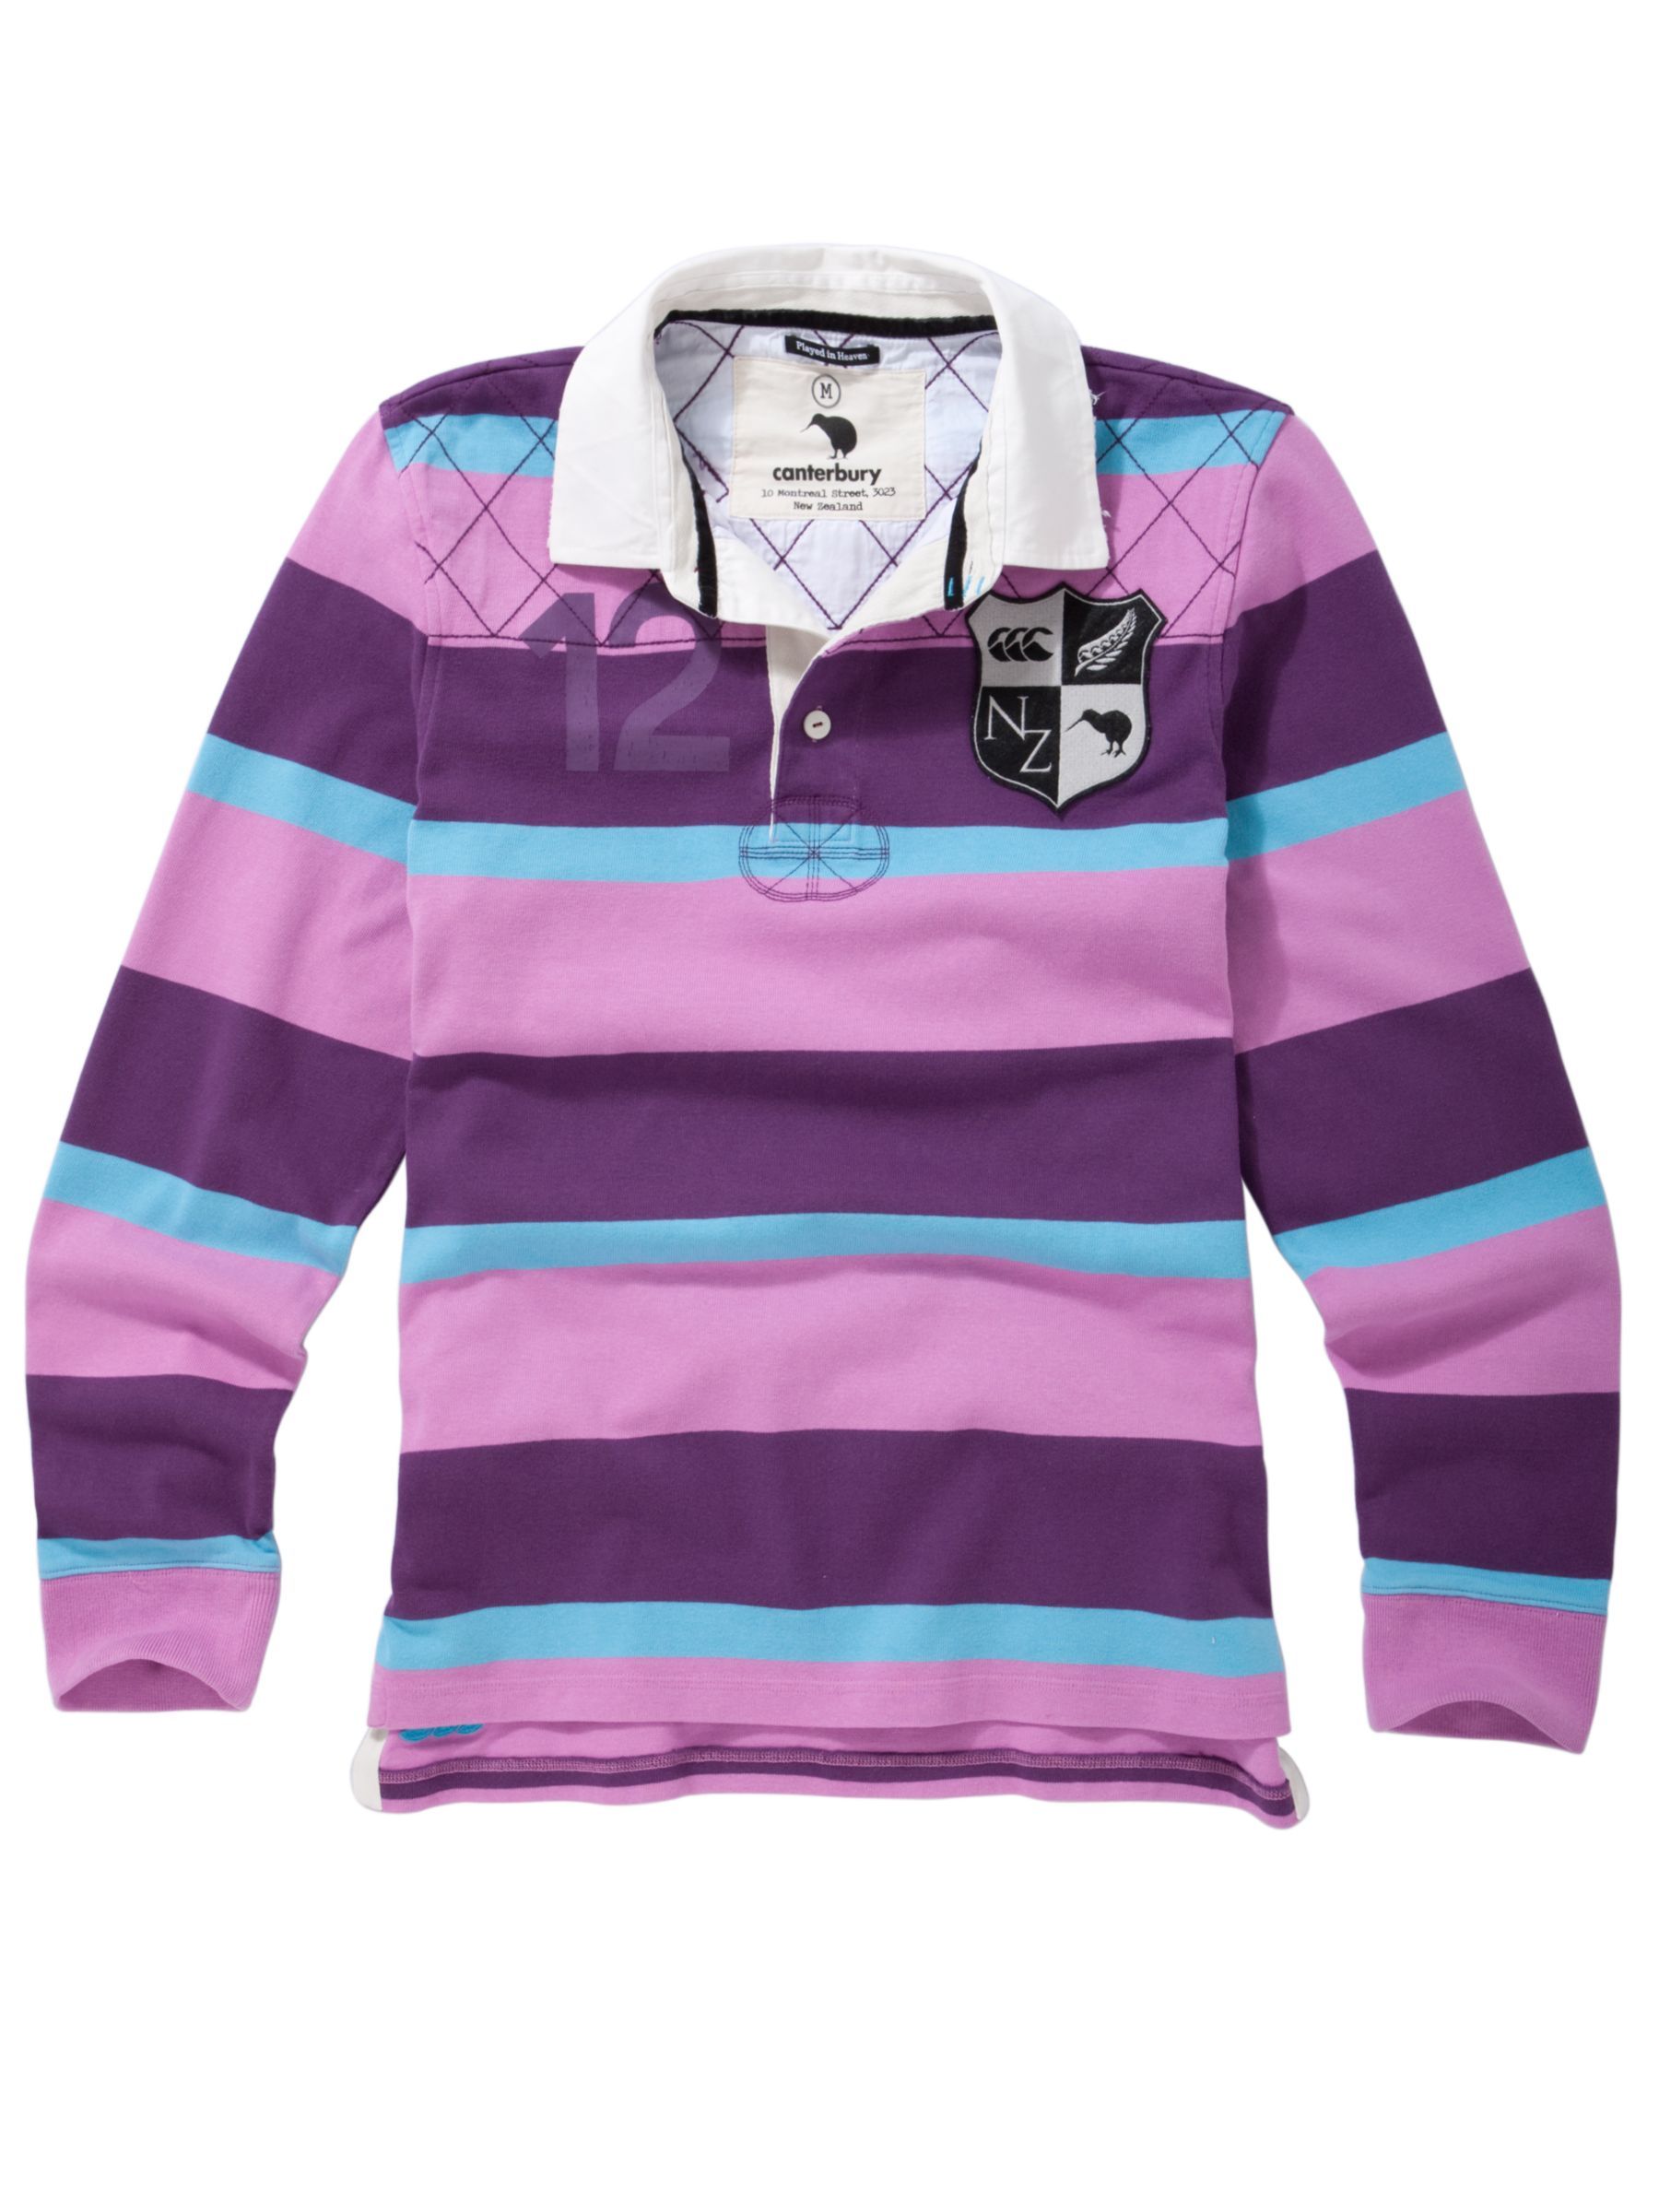 Williams Stripe Rugby Shirt, Plum